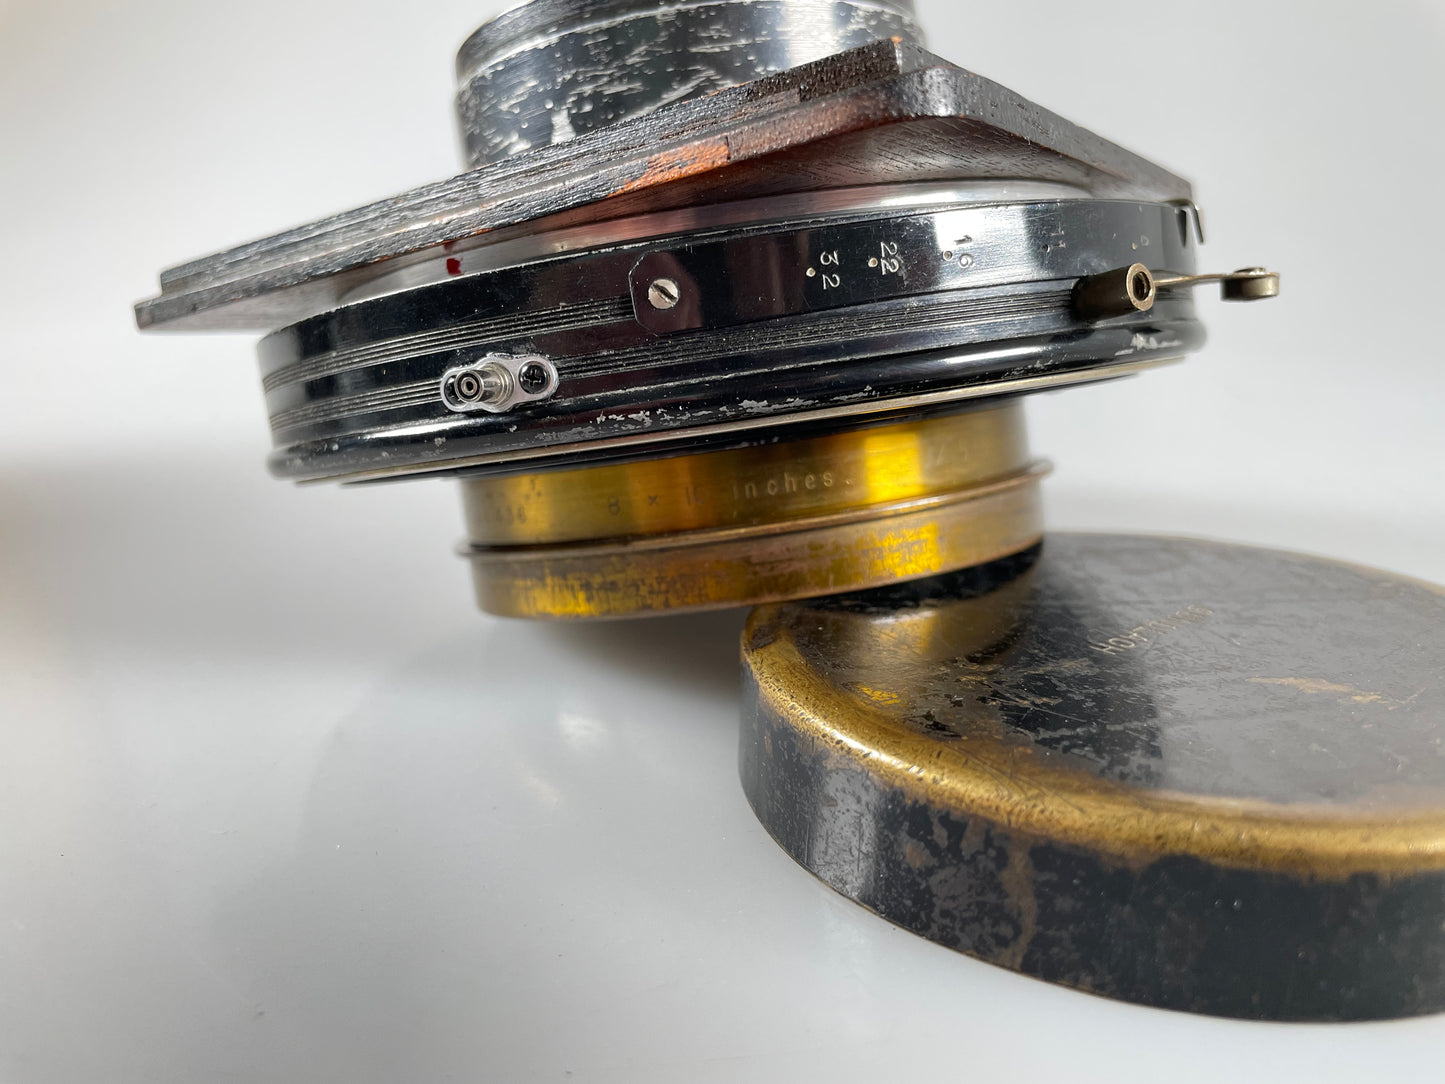 Cooke Anastigmat Series IV 13.1 Inch F5.6 Brass 8x10 Lens - Taylor Hobson in ilex shutter